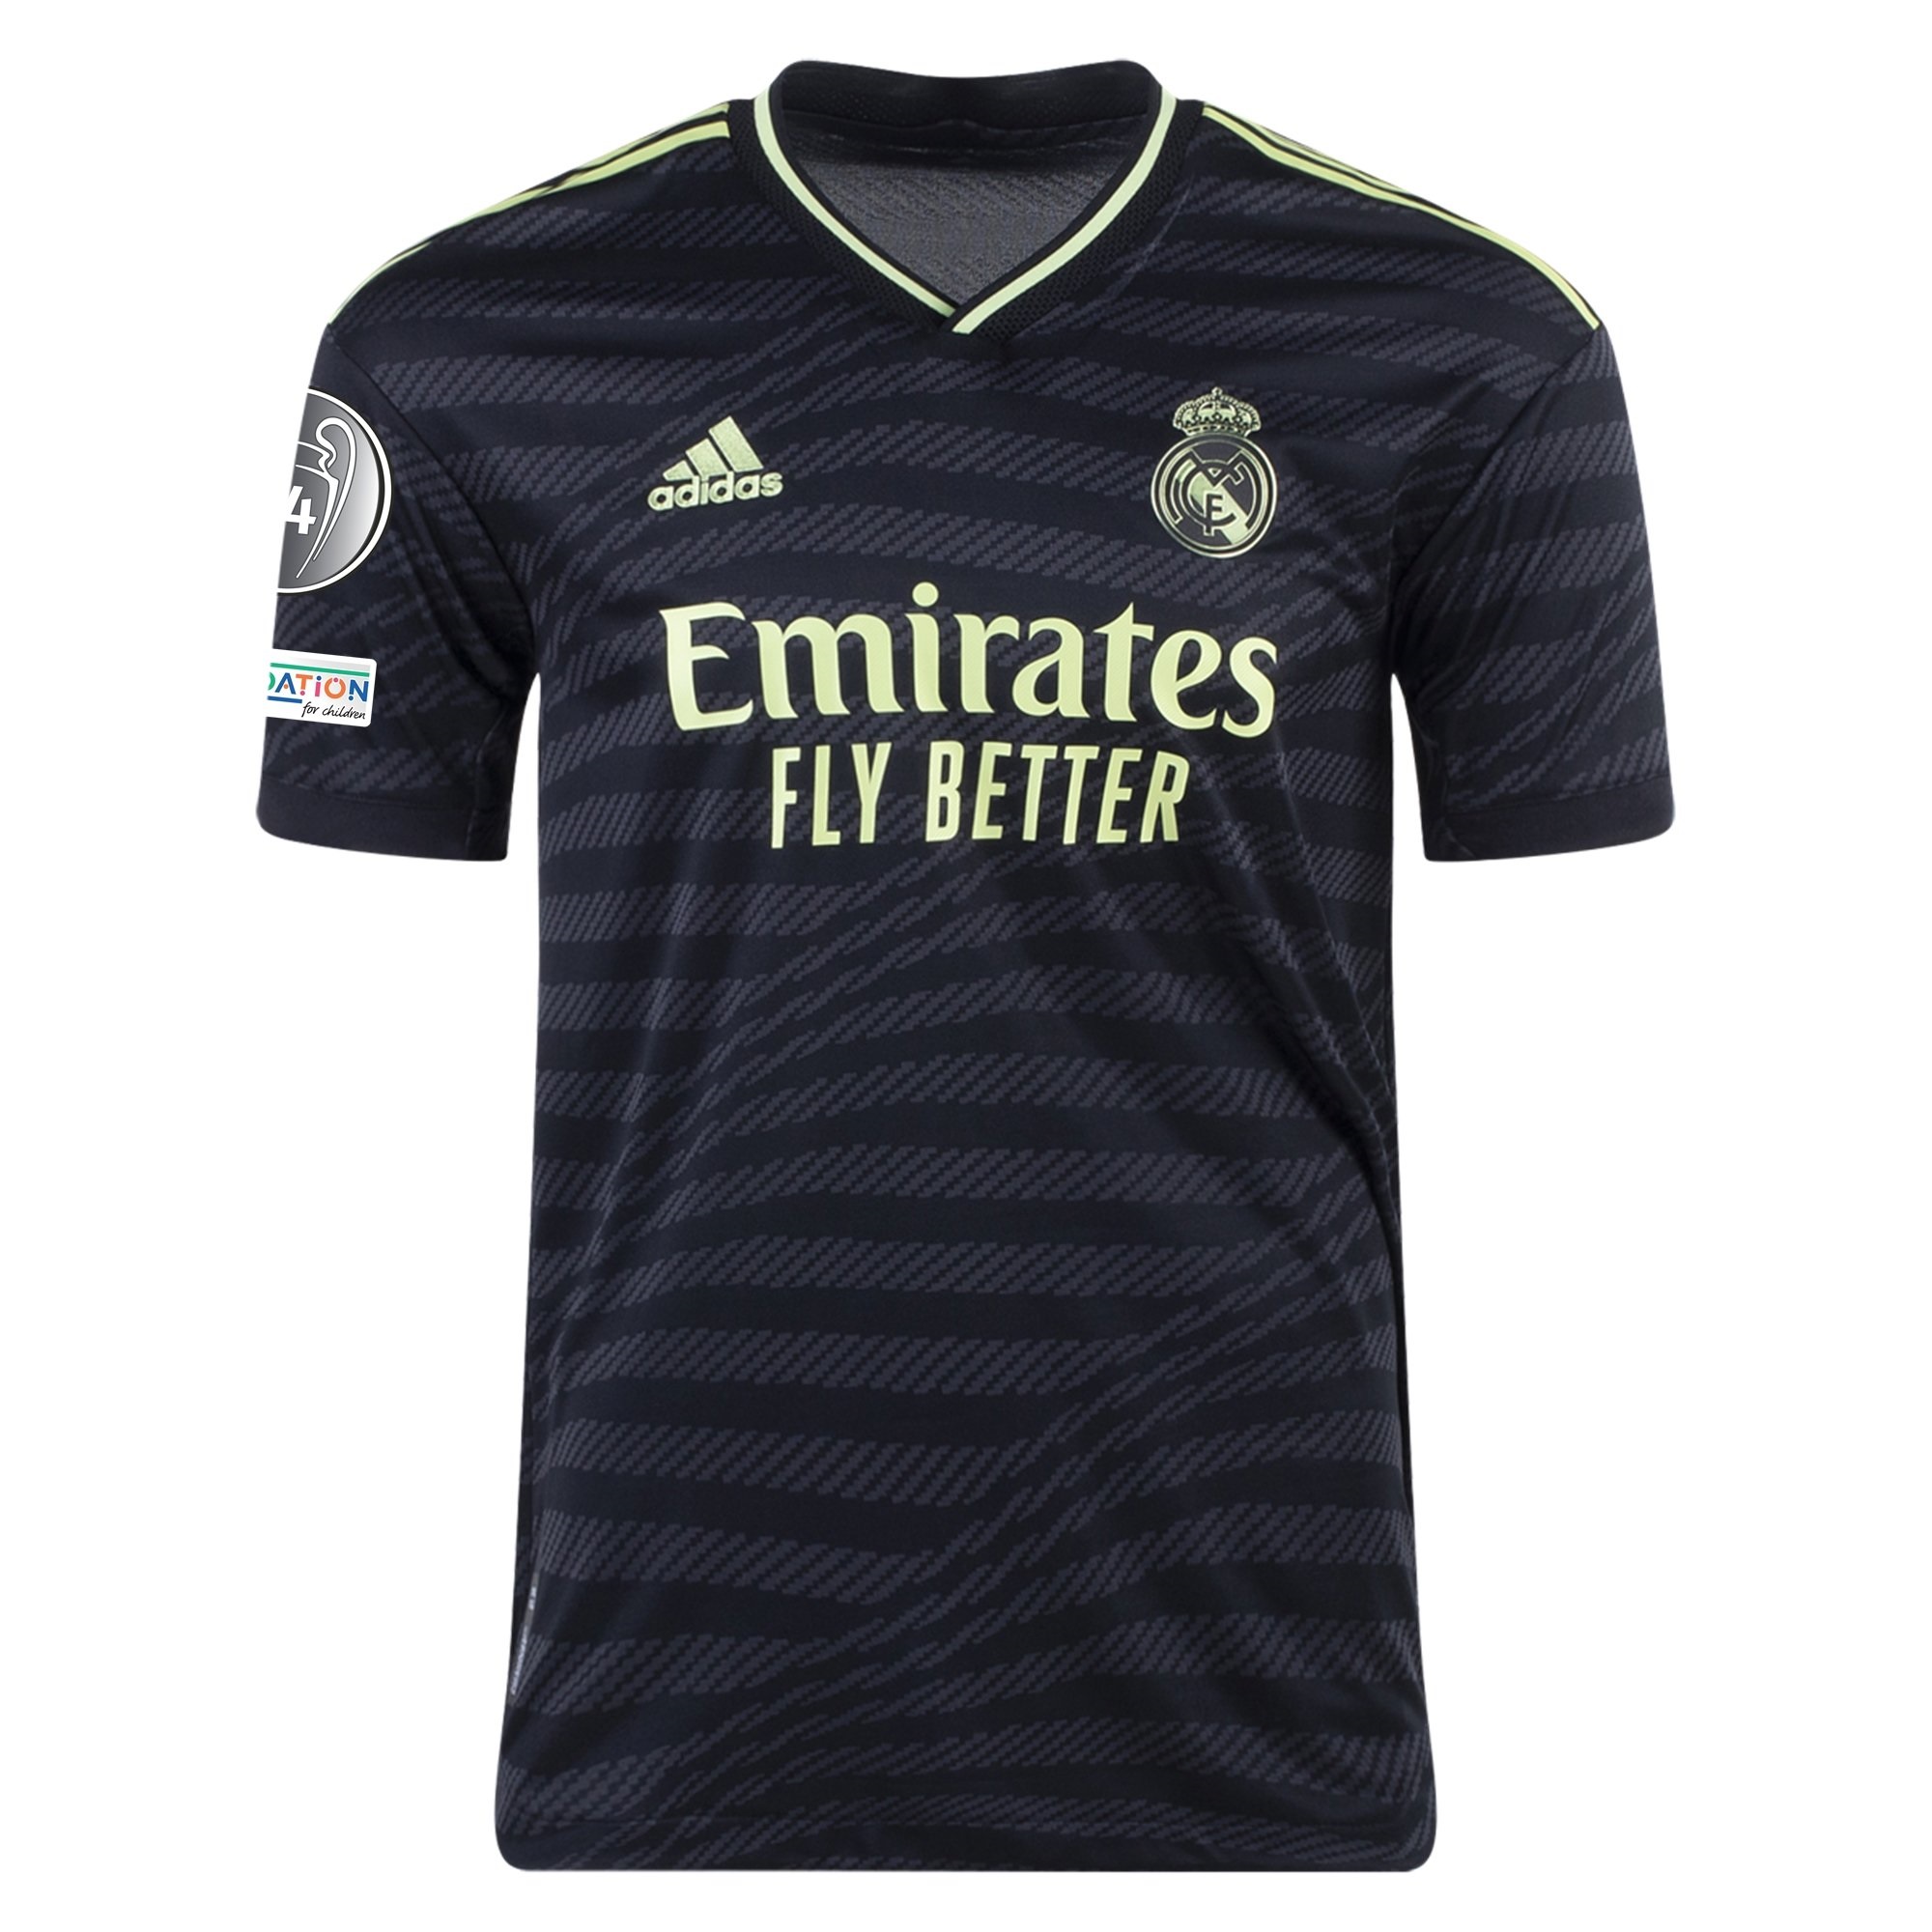 Real Madrid 21-22 Away Kit Released  Real madrid shirt, Real madrid kit, Real  madrid